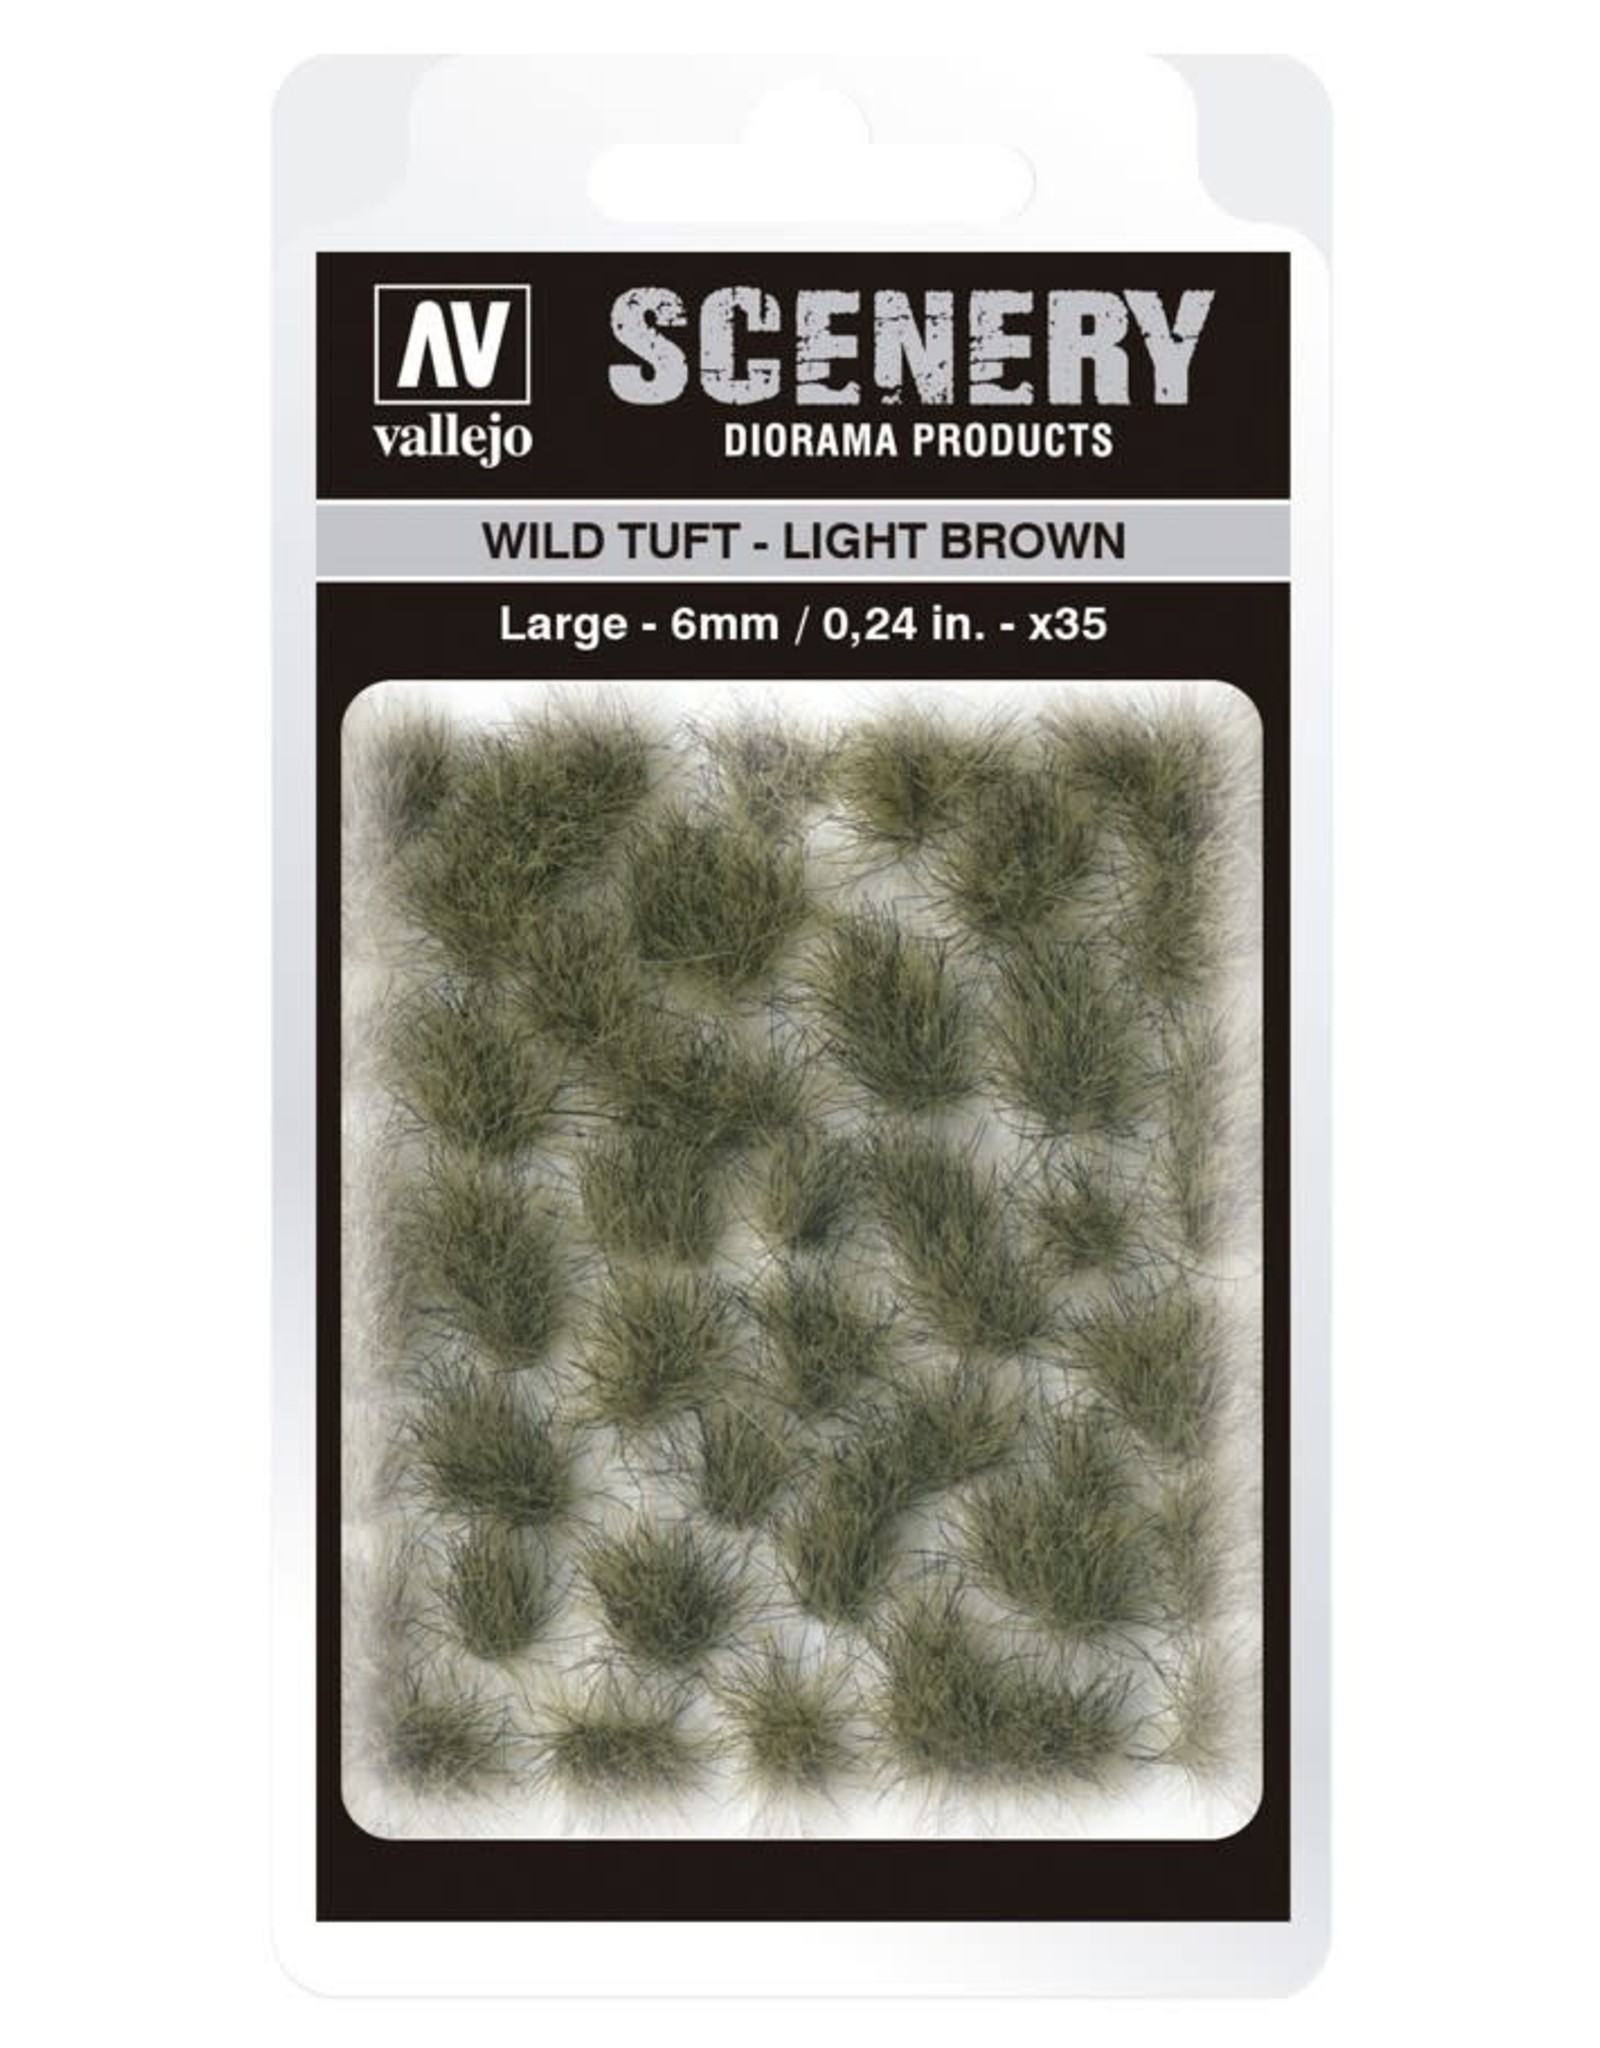 Acrylicos Vallejo AV Scenery: Wild Tuft - Light Brown - Large